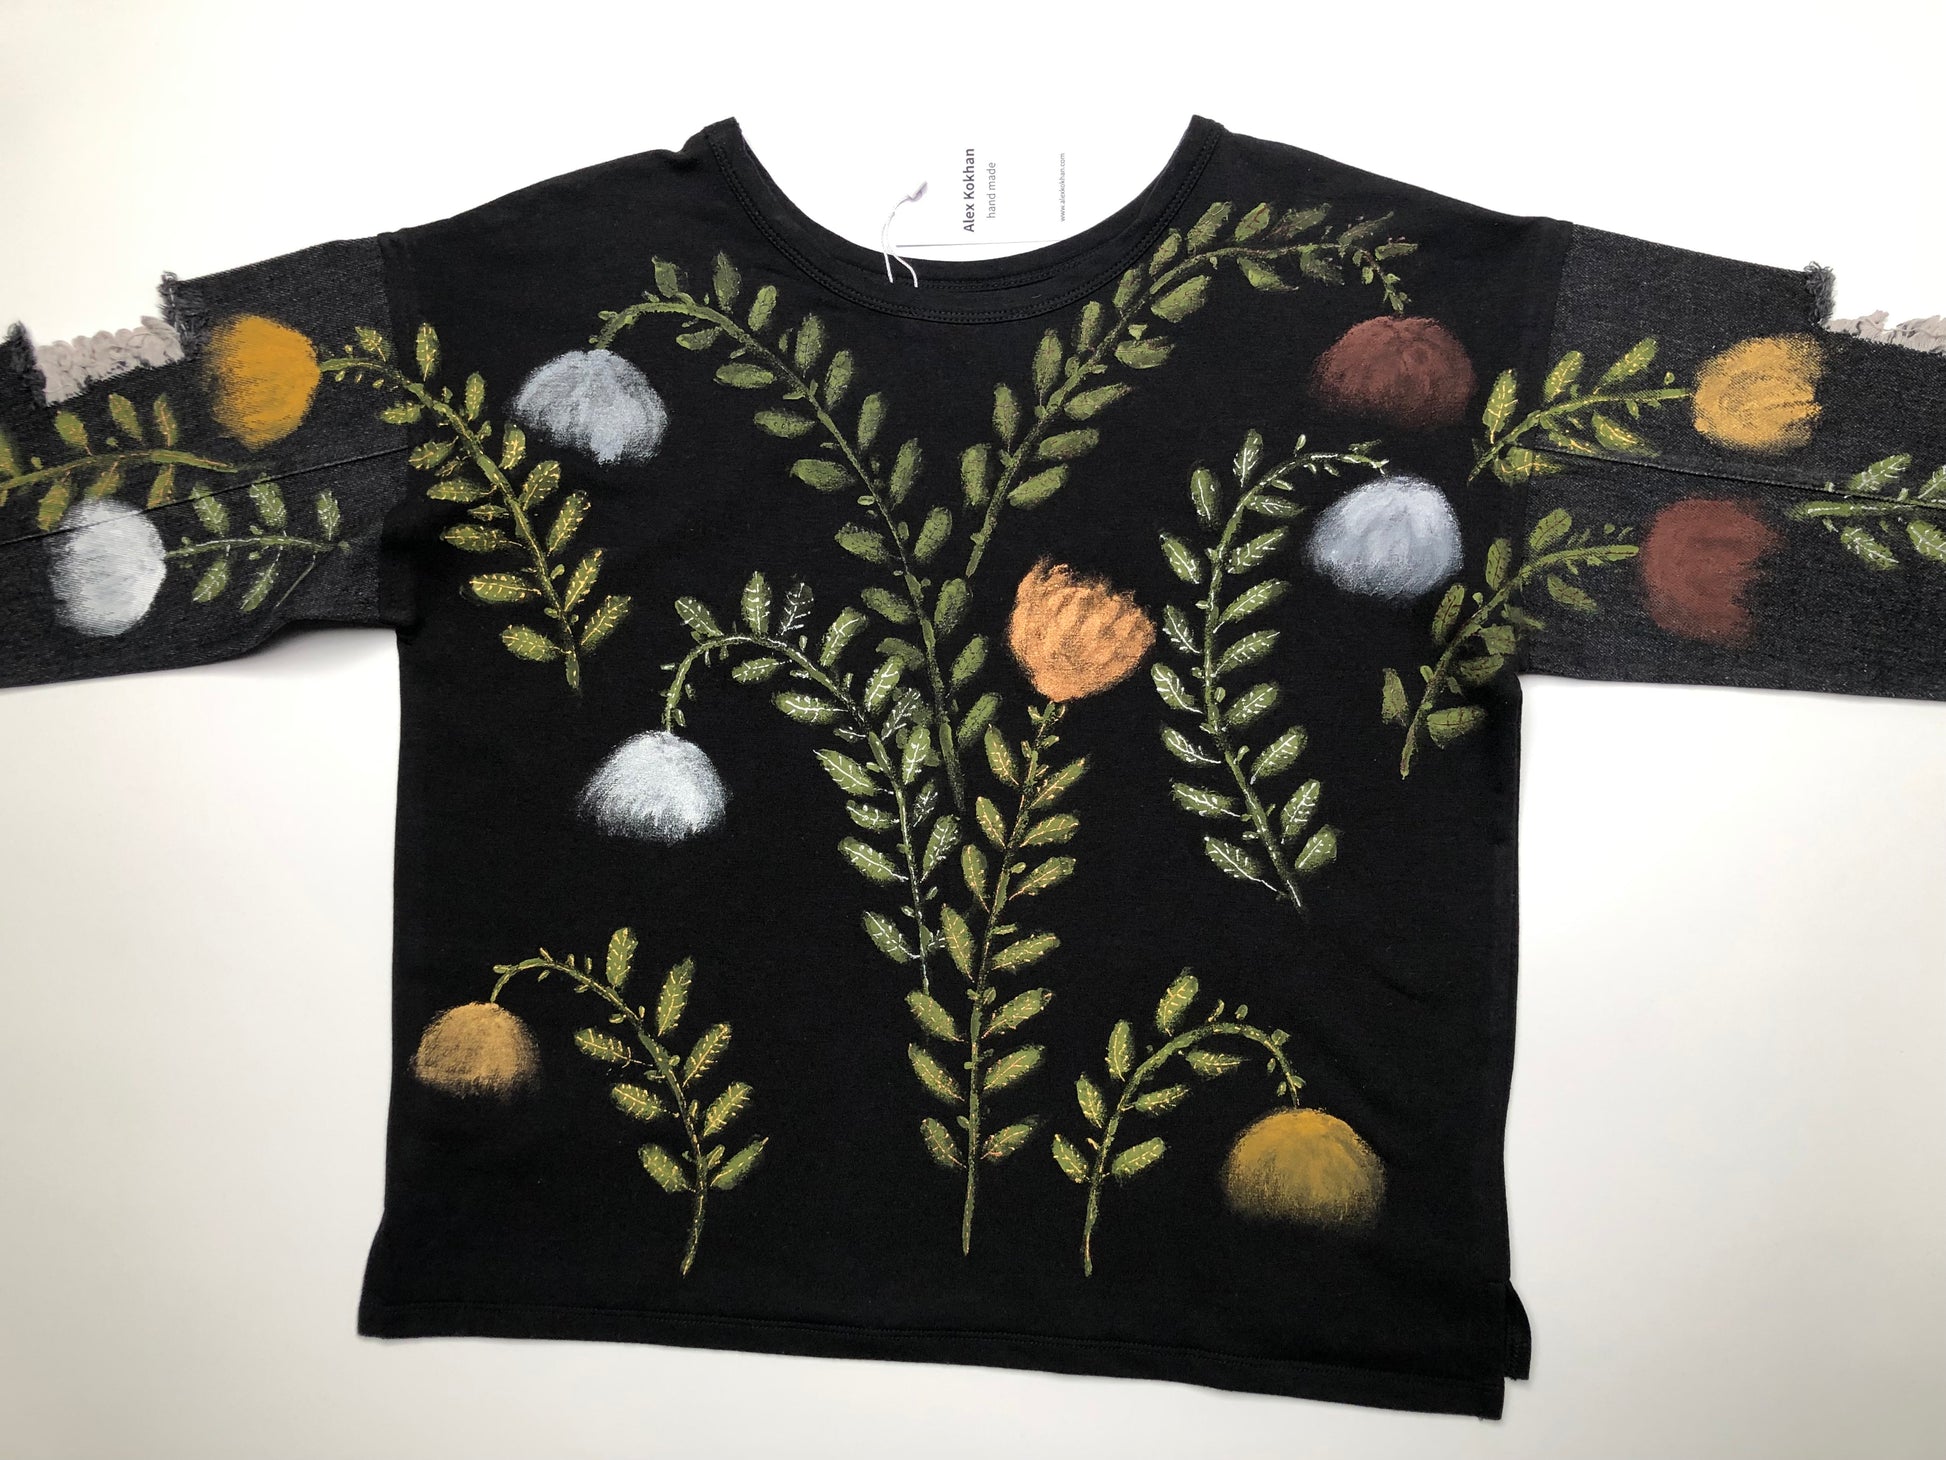 Detailed floral pattern decor on women's black clothes back sweatshirt